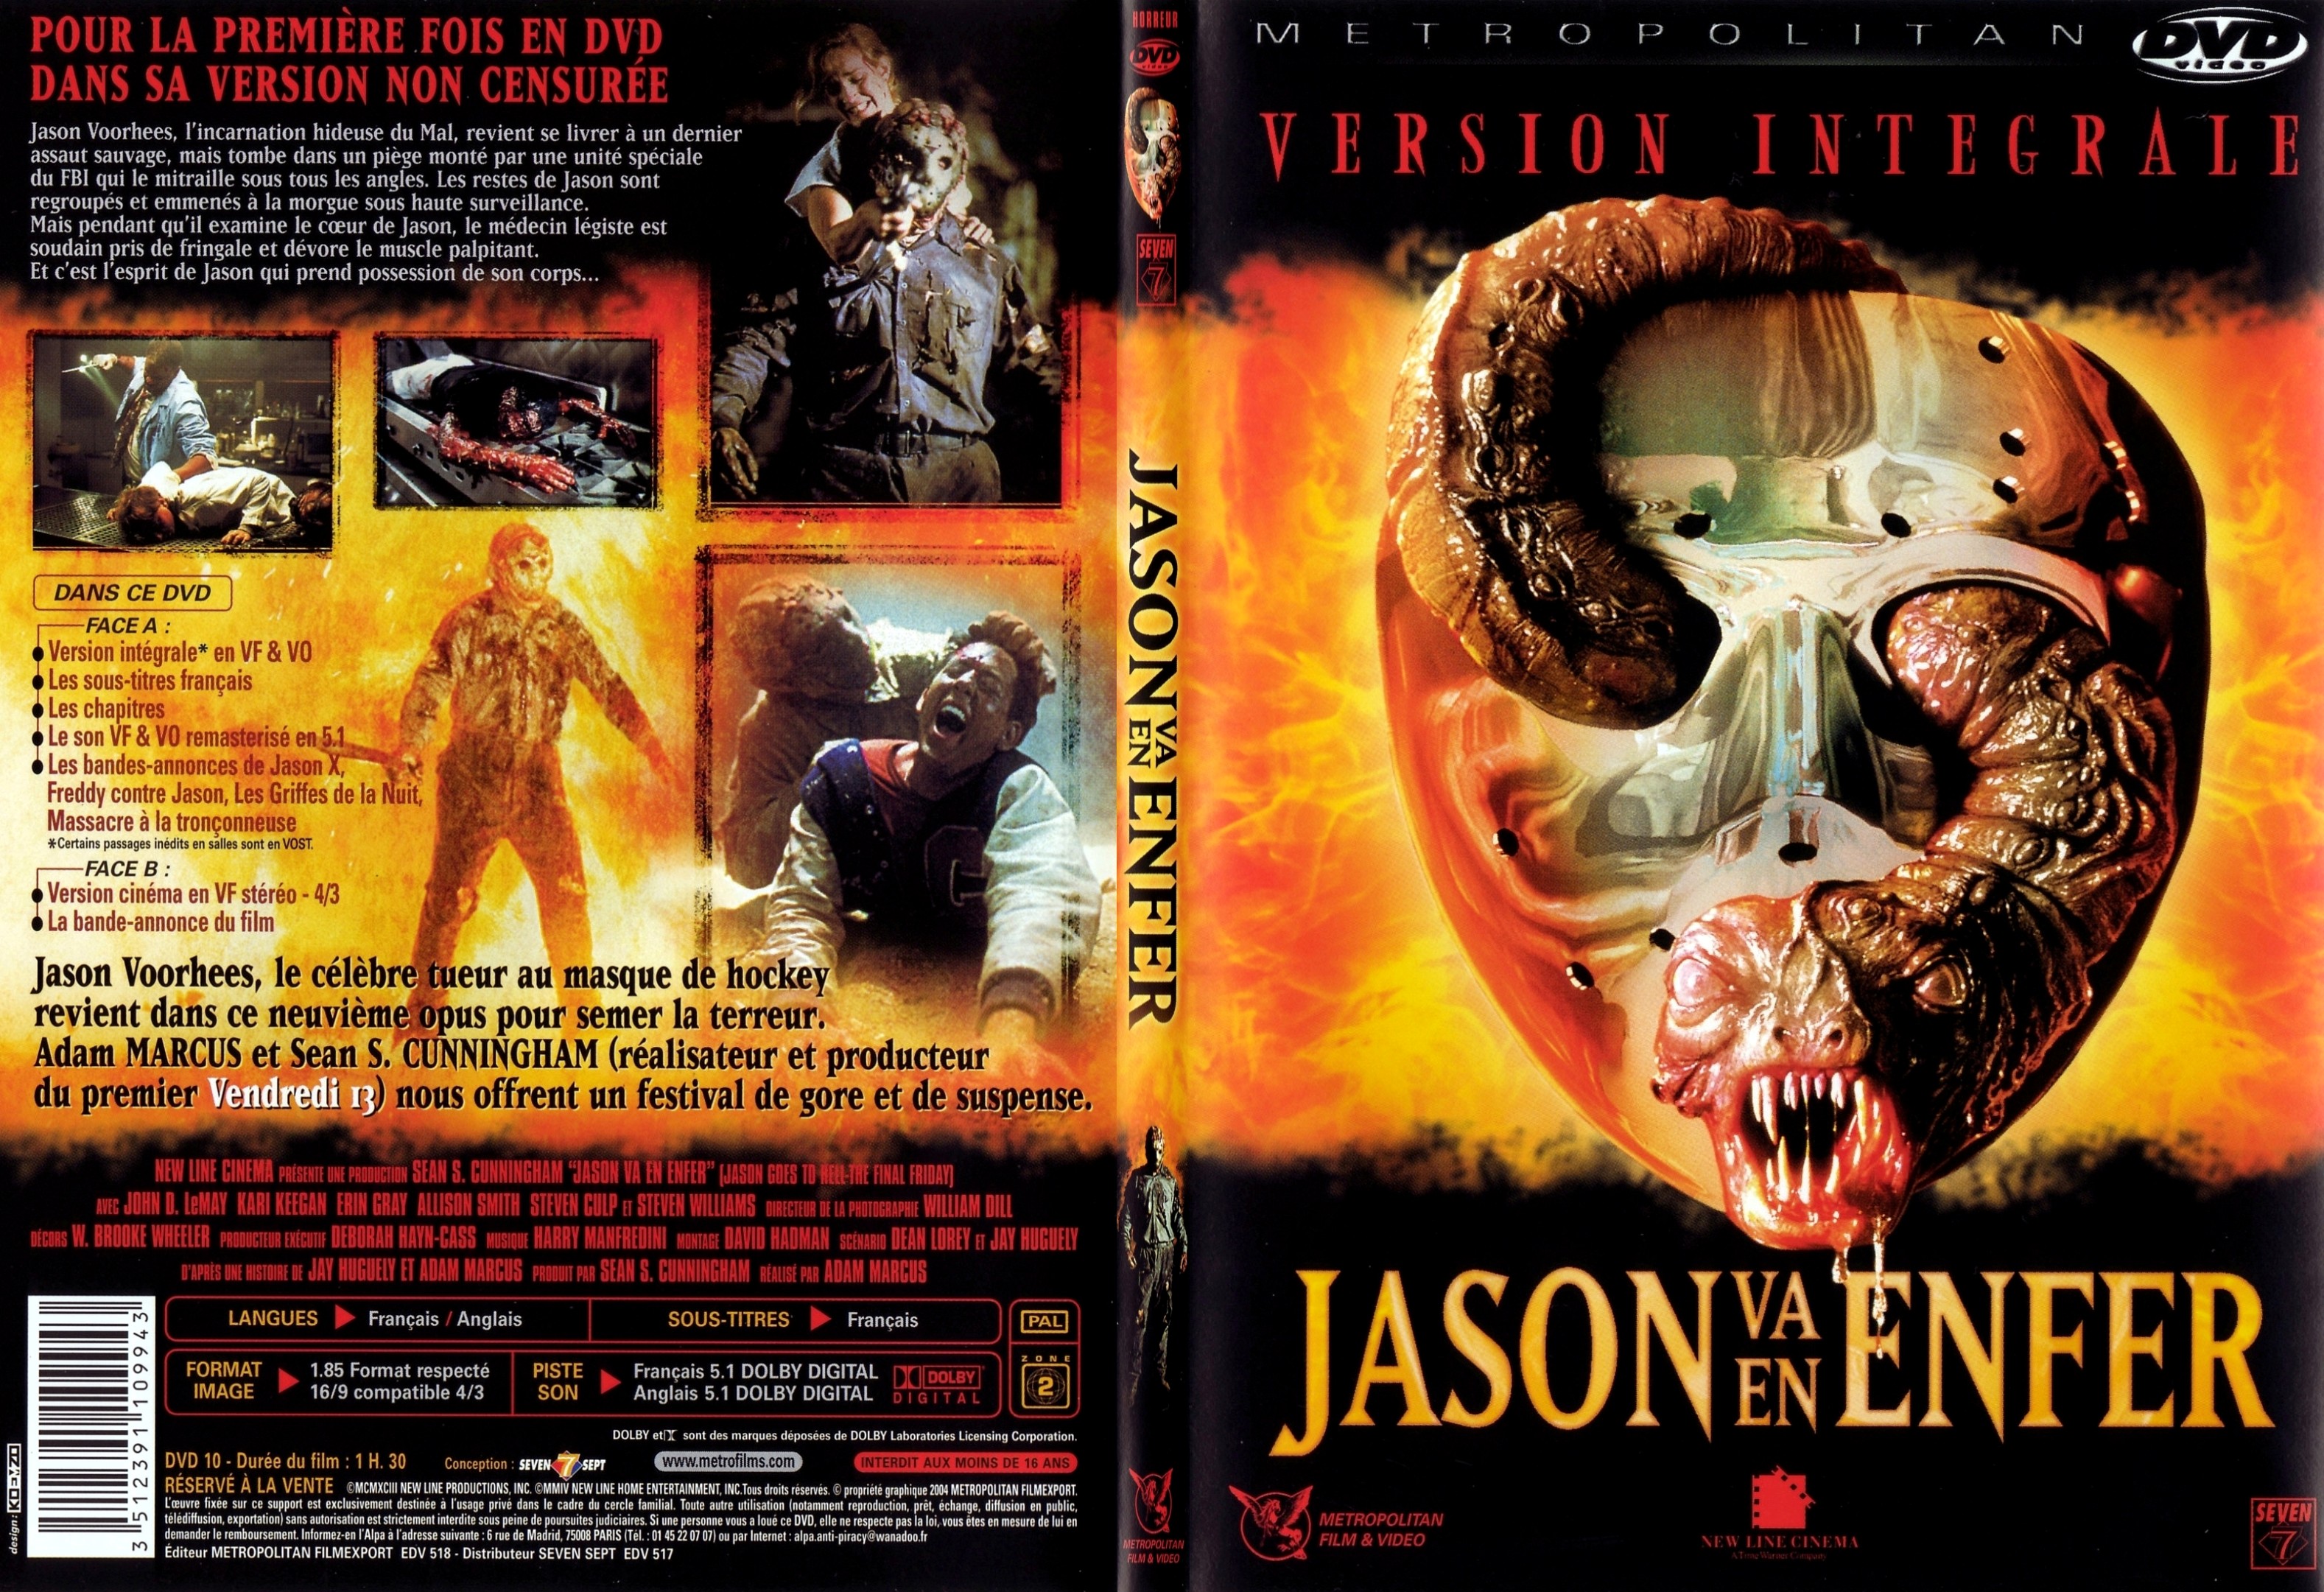 Jaquette DVD Jason va en enfer - SLIM